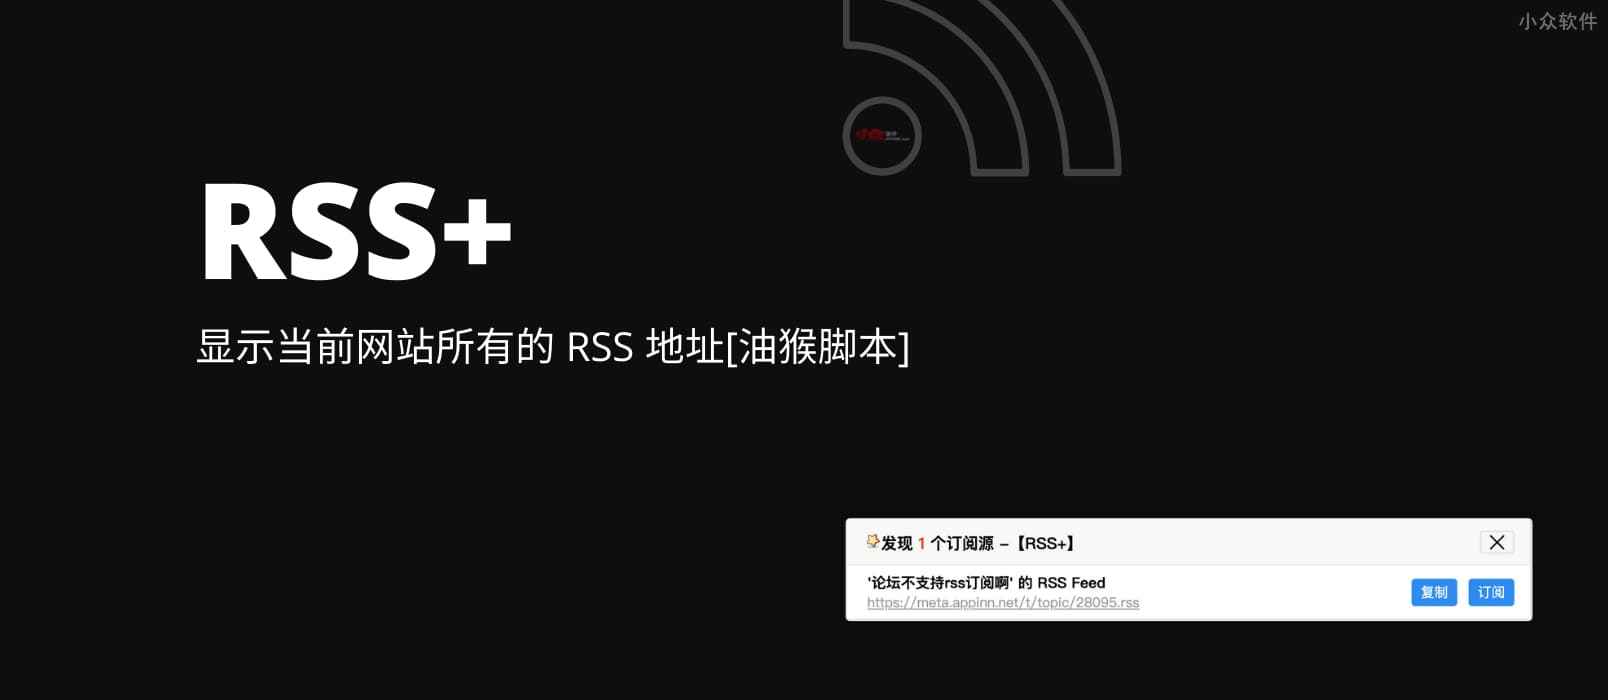 RSS+ & RSSHelper - 显示当前网站的 RSS  地址[2个油猴脚本]